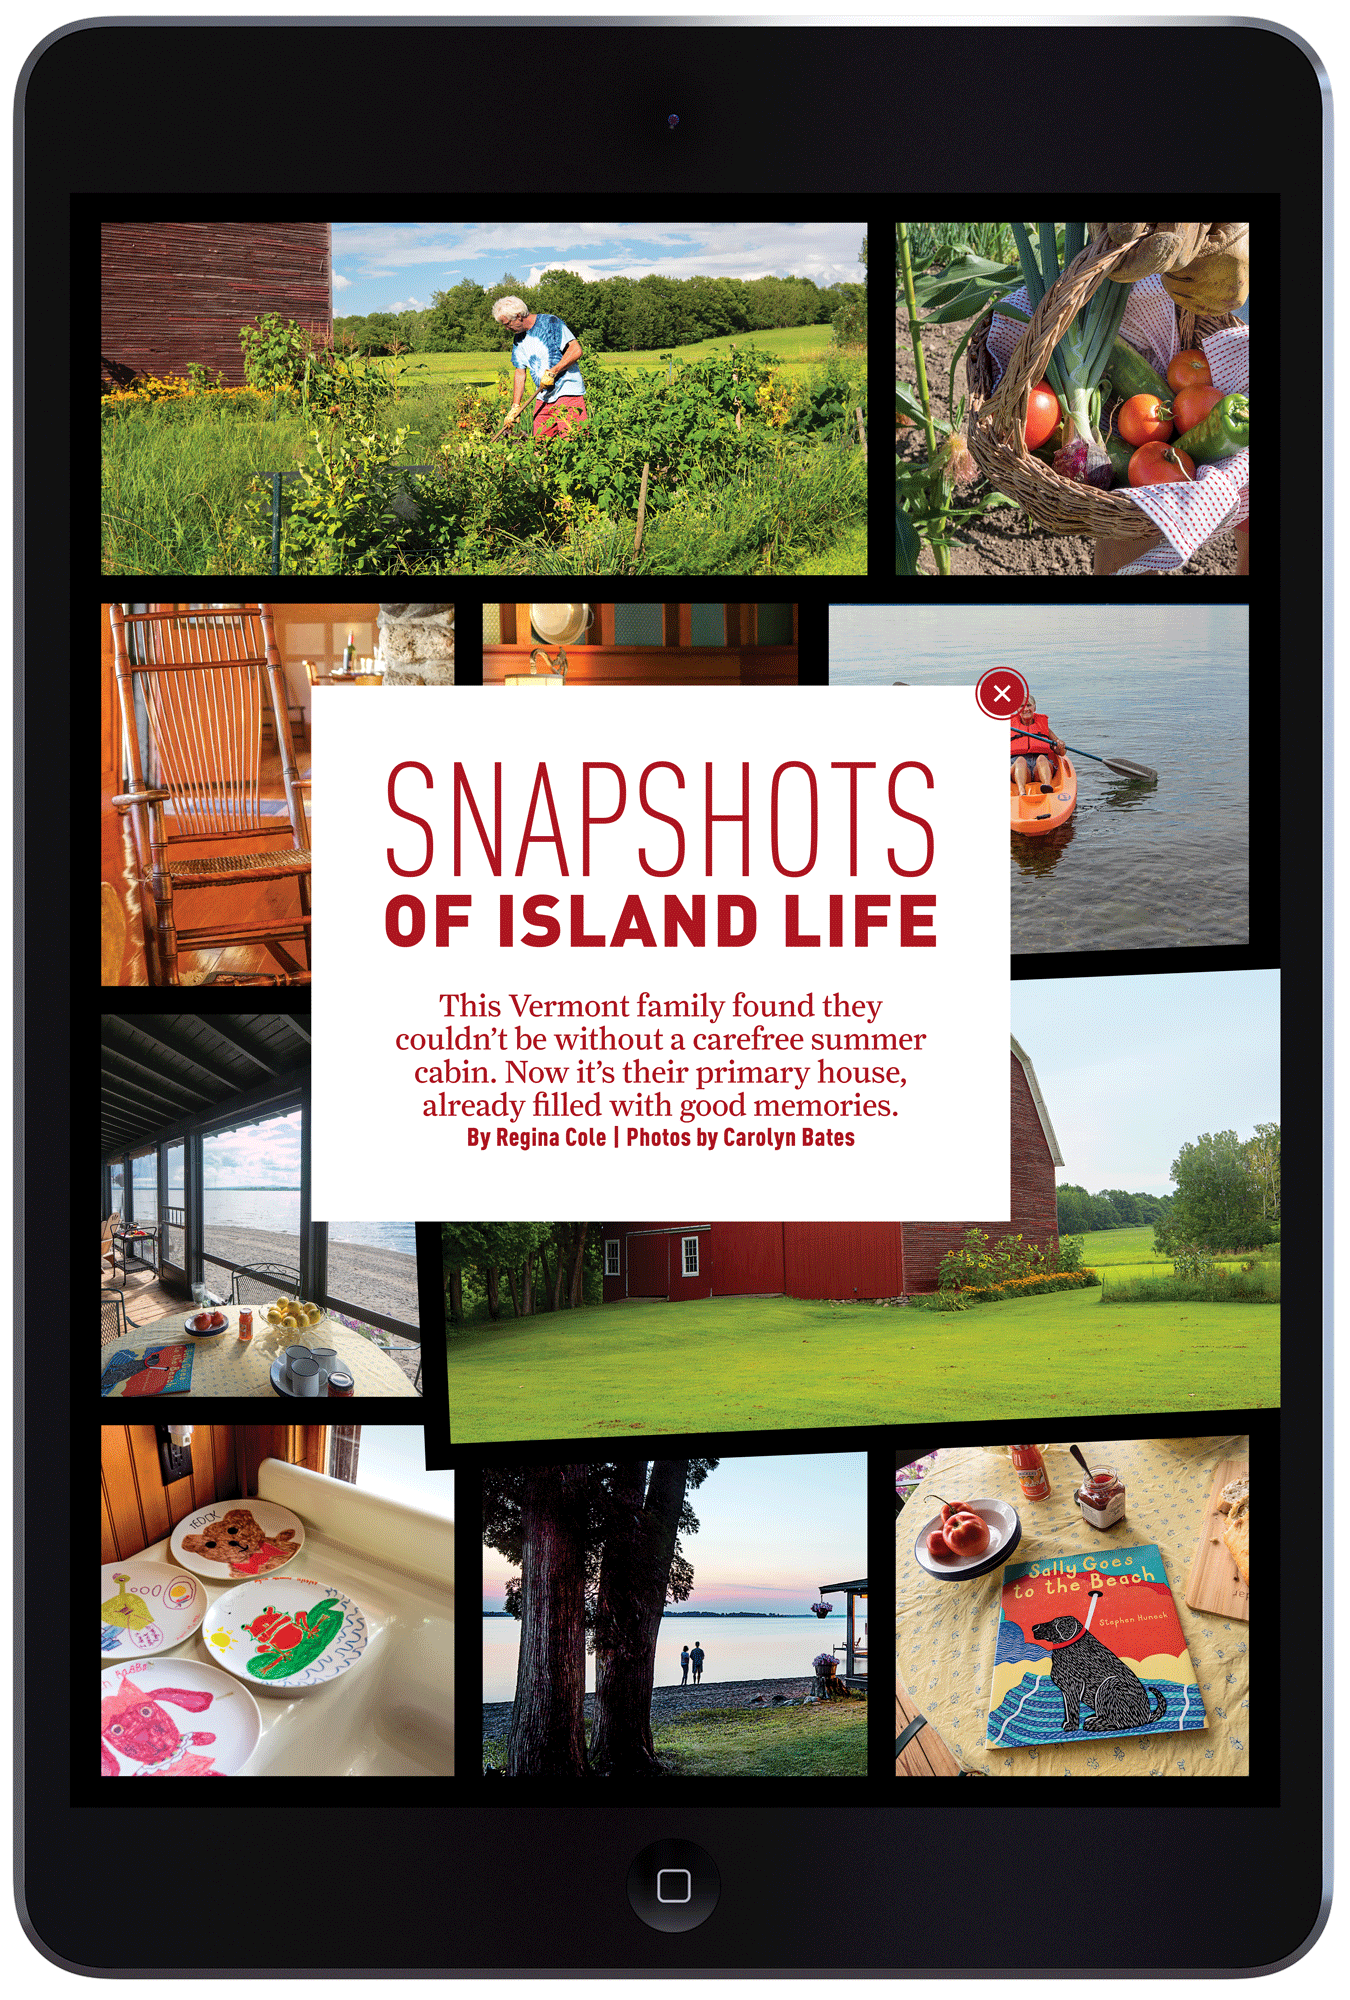 Snapshots of Island Life by Megan Hillman